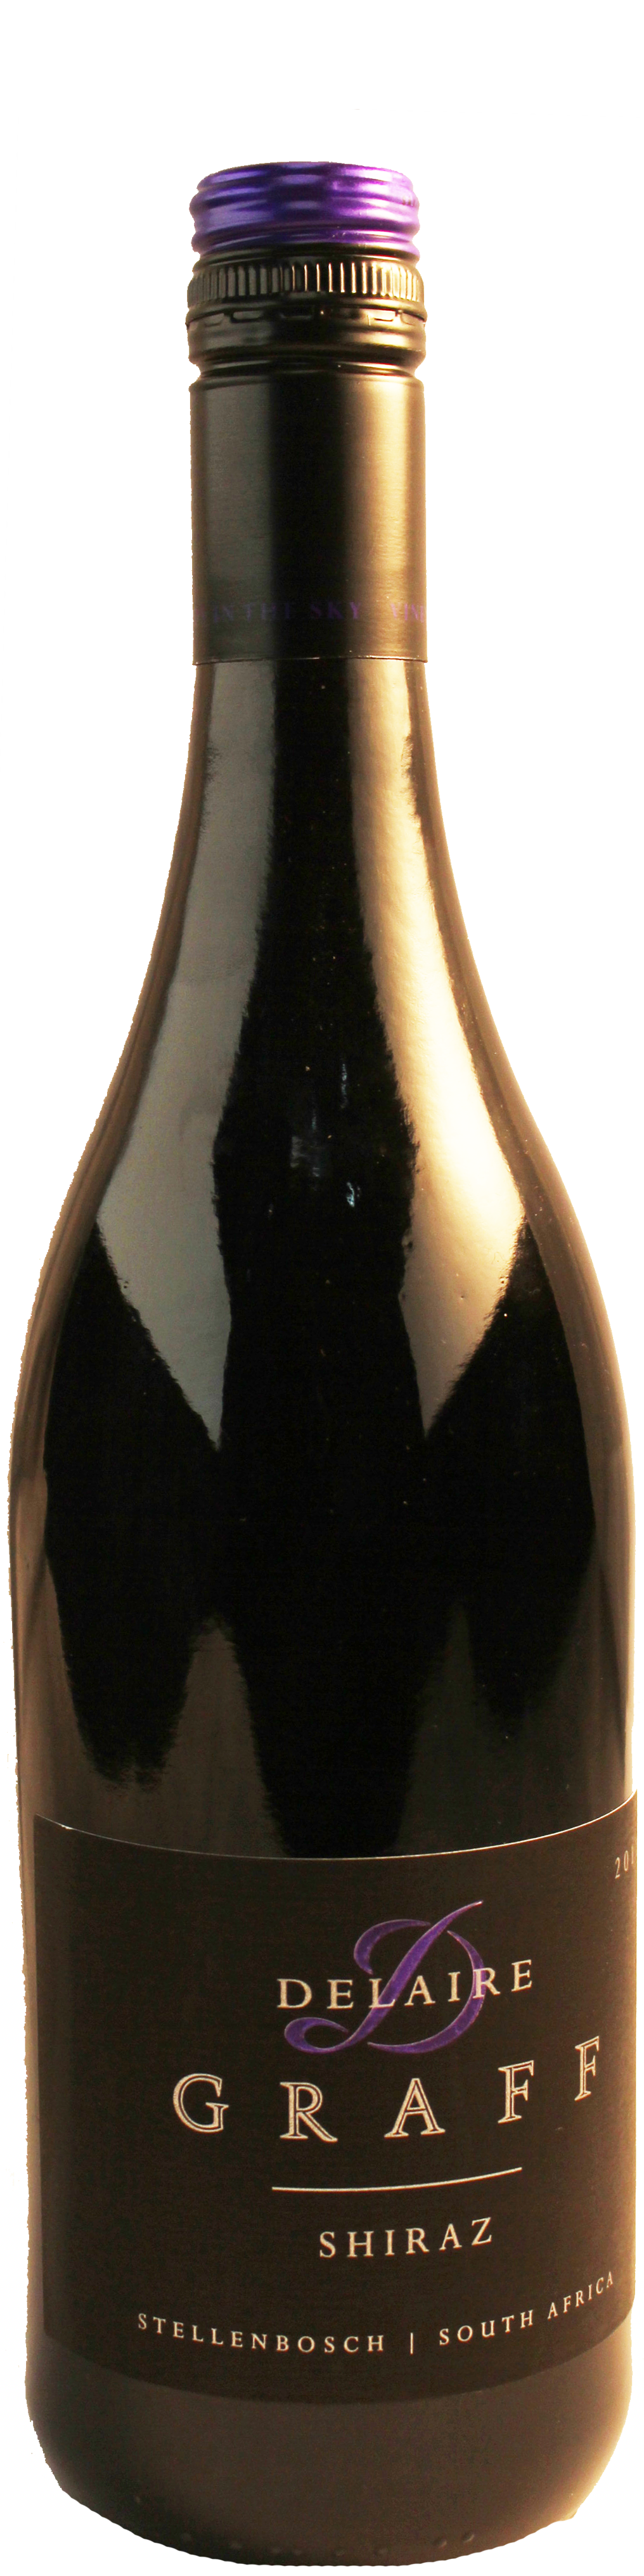 Bottle shot of 2012 Shiraz